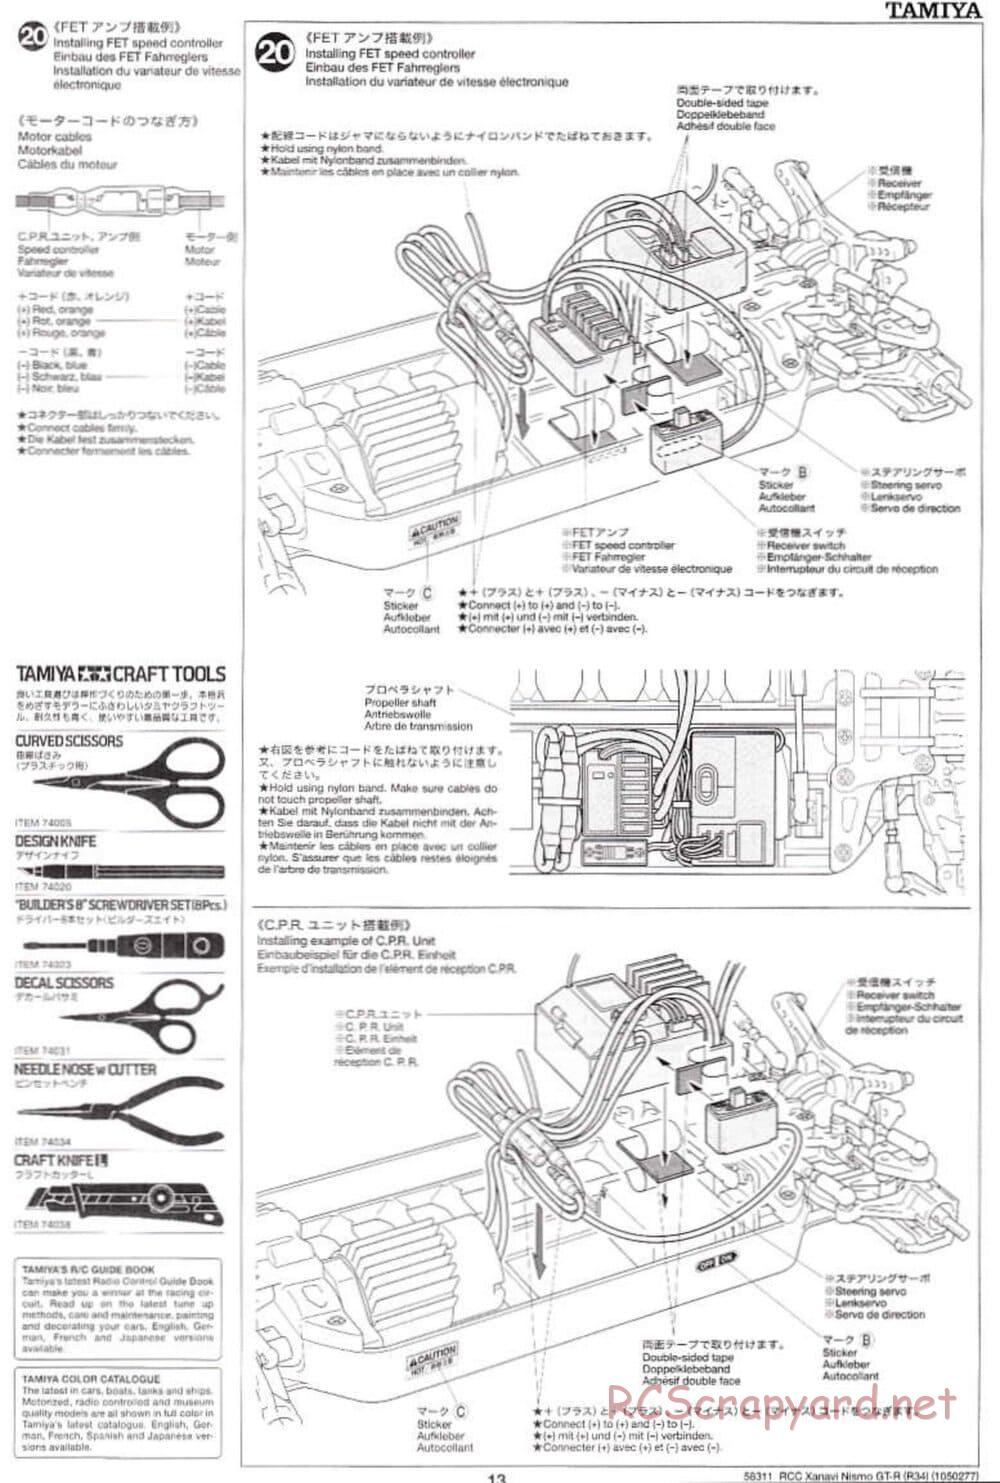 Tamiya - Xanavi Nismo GT-R (R34) - TB-02 Chassis - Manual - Page 13